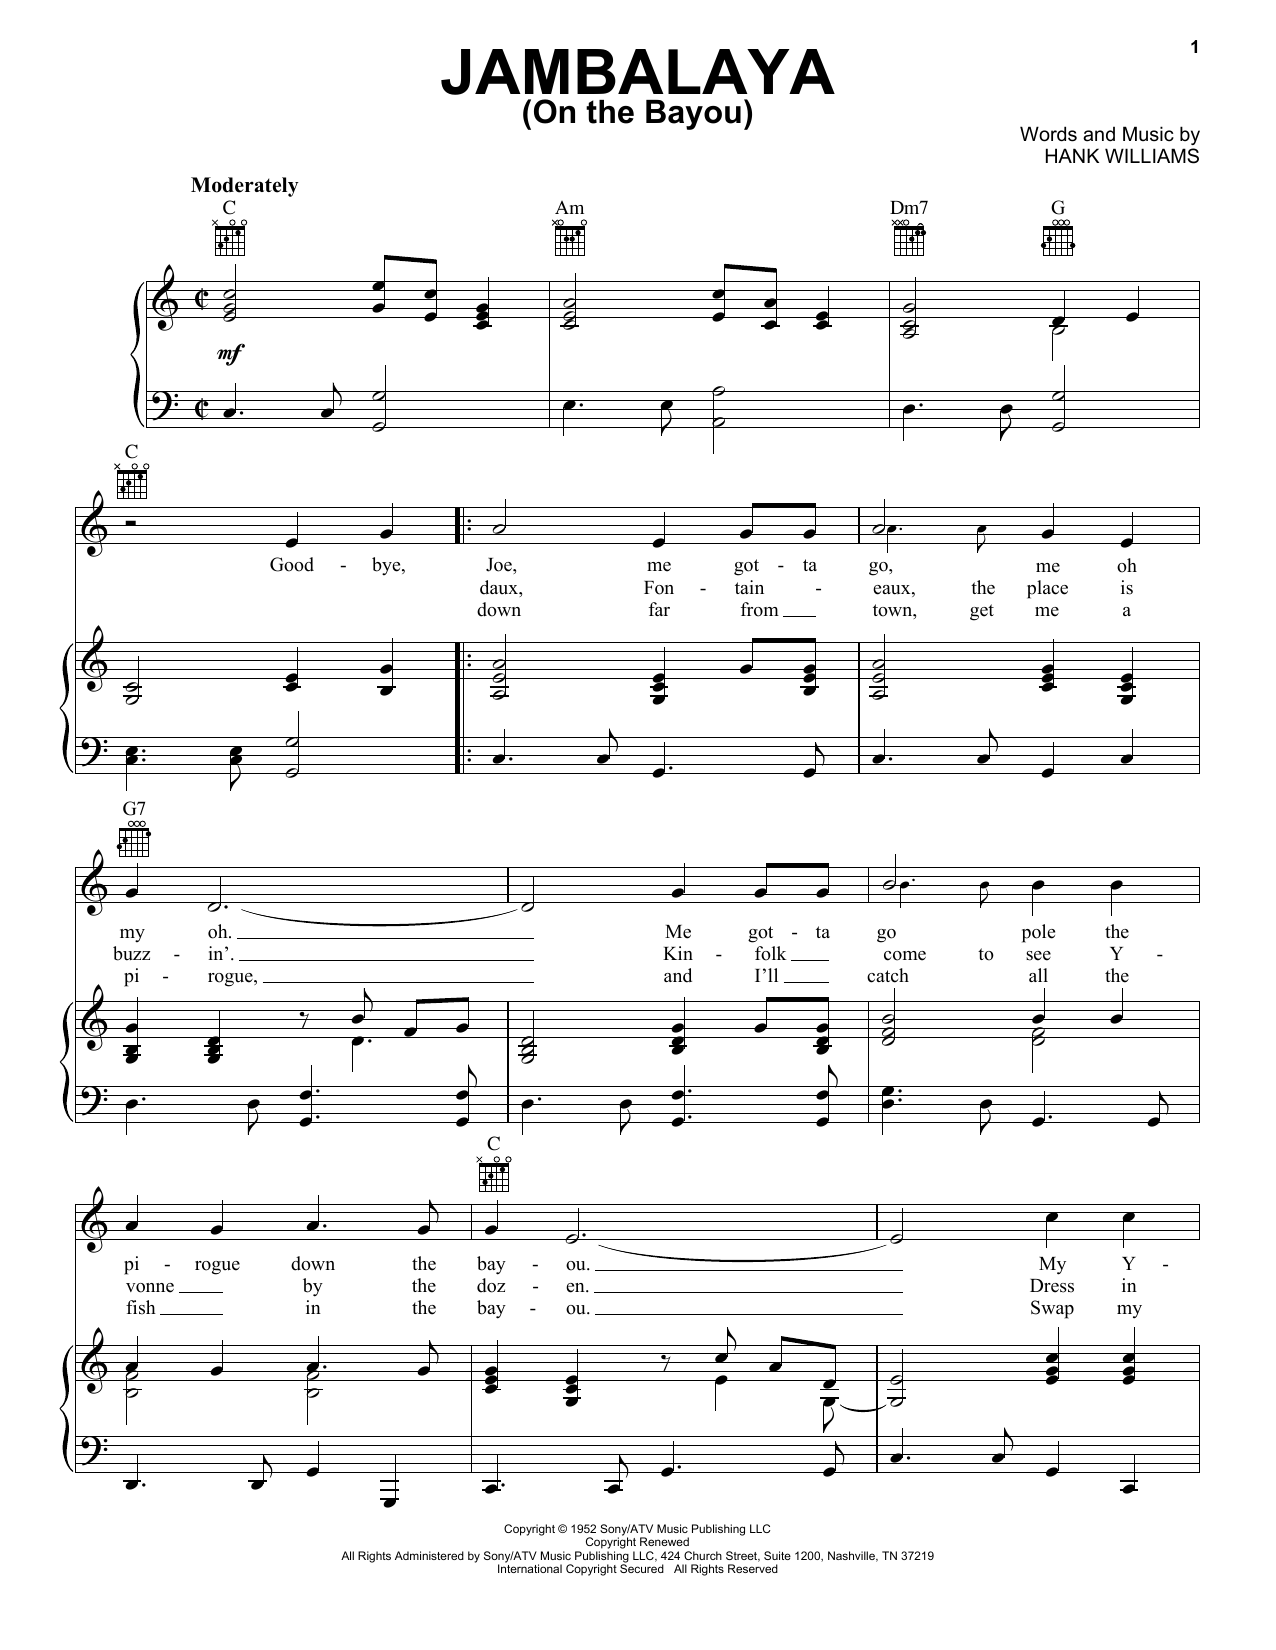 Hank Williams Jambalaya (On The Bayou) Sheet Music Notes & Chords for Melody Line, Lyrics & Chords - Download or Print PDF